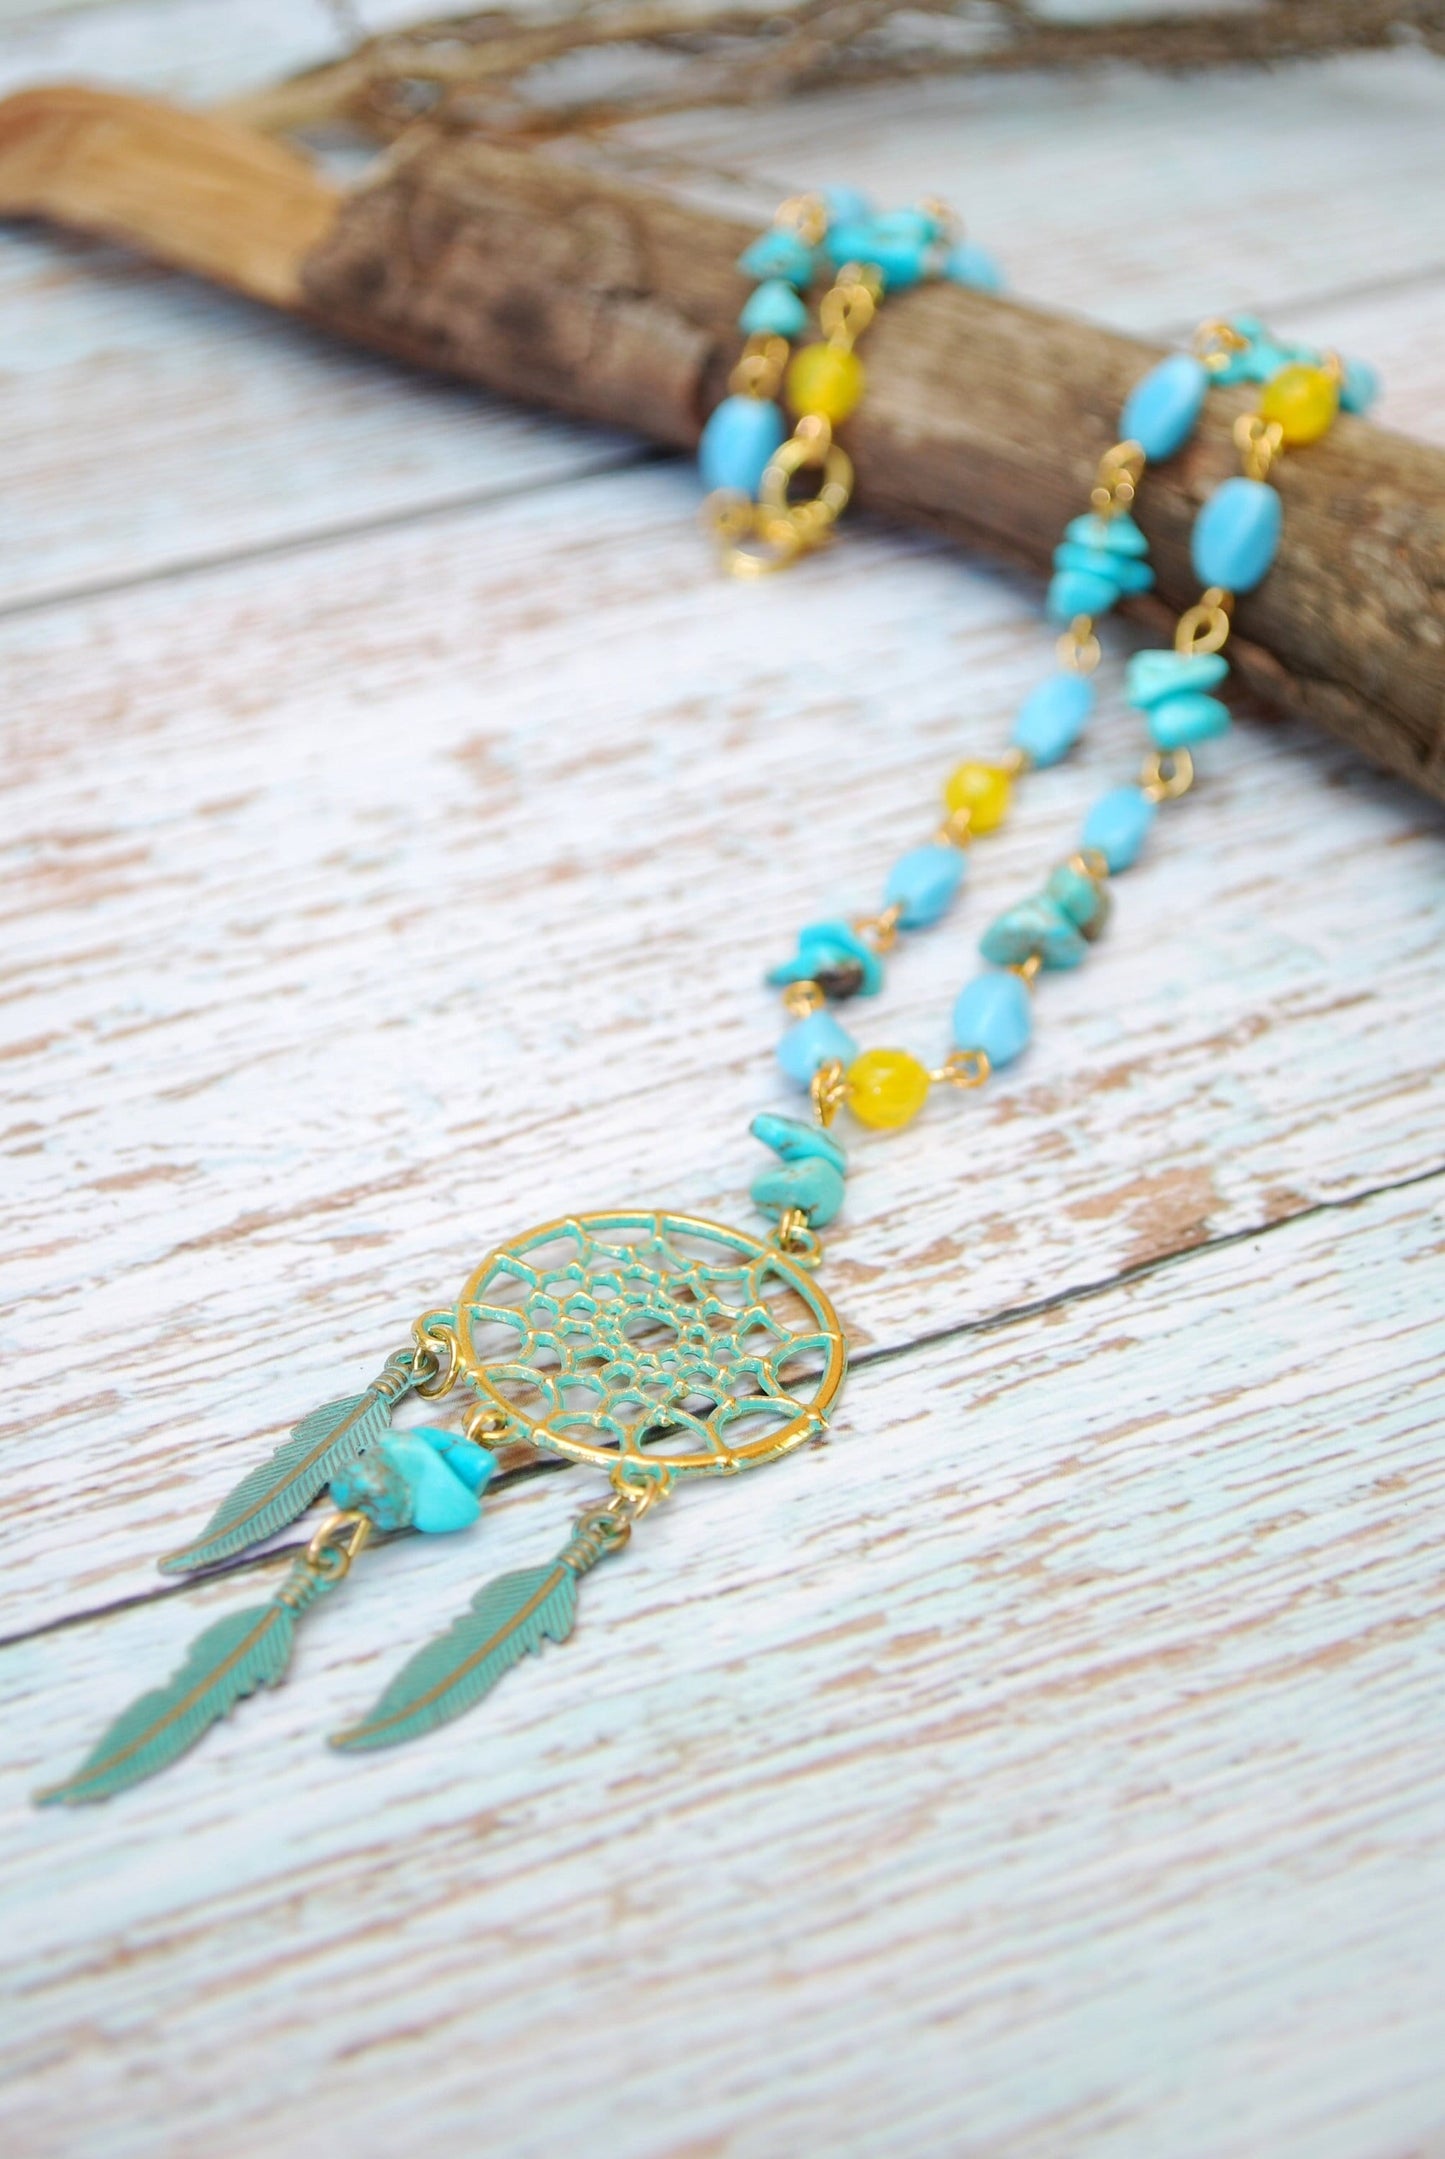 Spiritual Native American-Inspired Gold Pendant Necklace featuring Turquoise Quartz Stone and Beaded Feathers.  Estibeela design. 20"